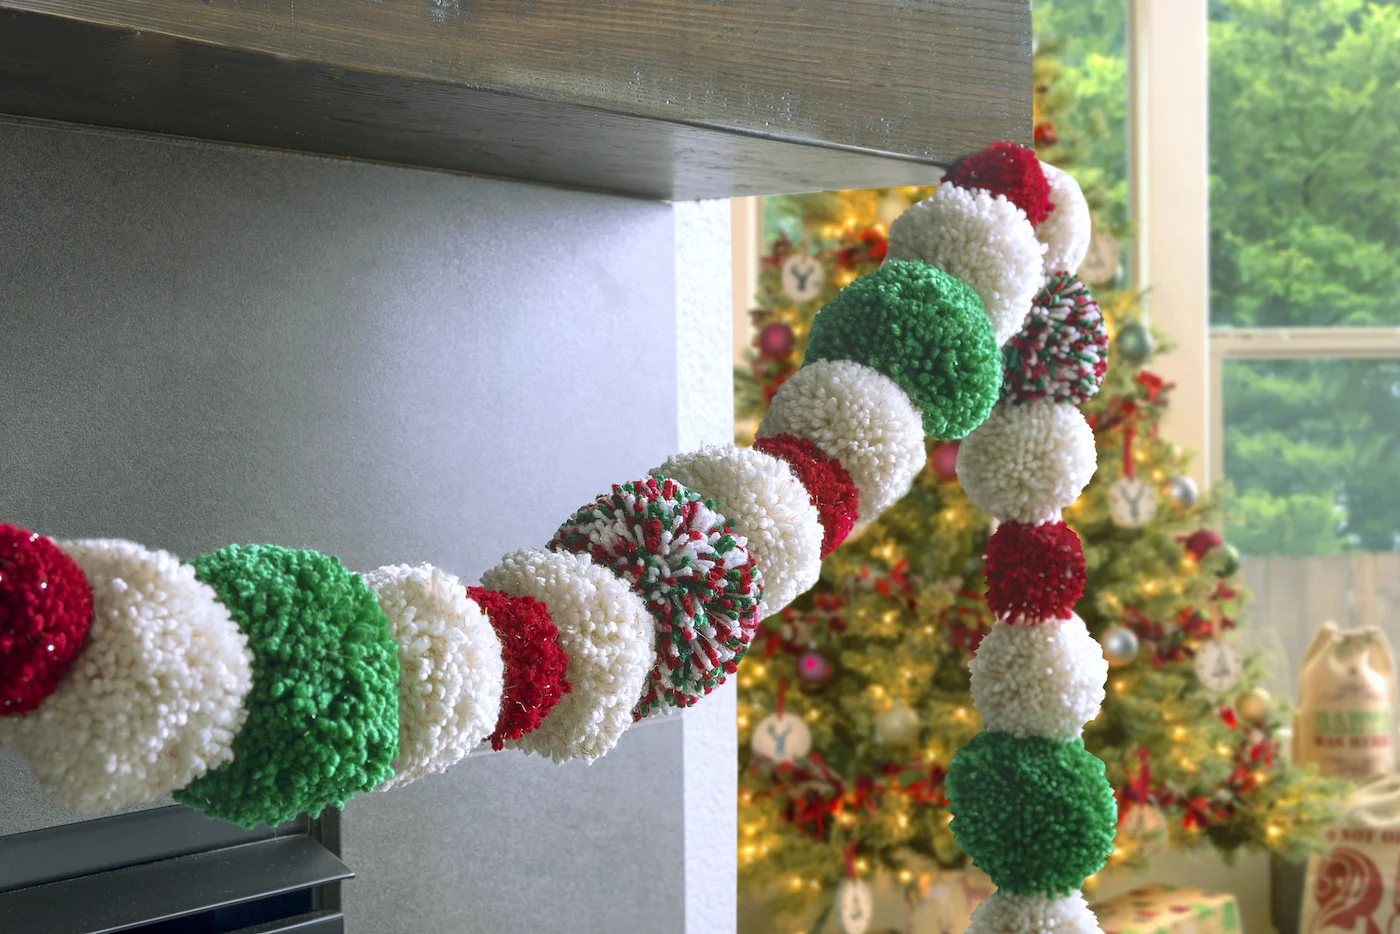 Pom Pom Christmas Garland To Decorate for the Holidays - DIY Candy